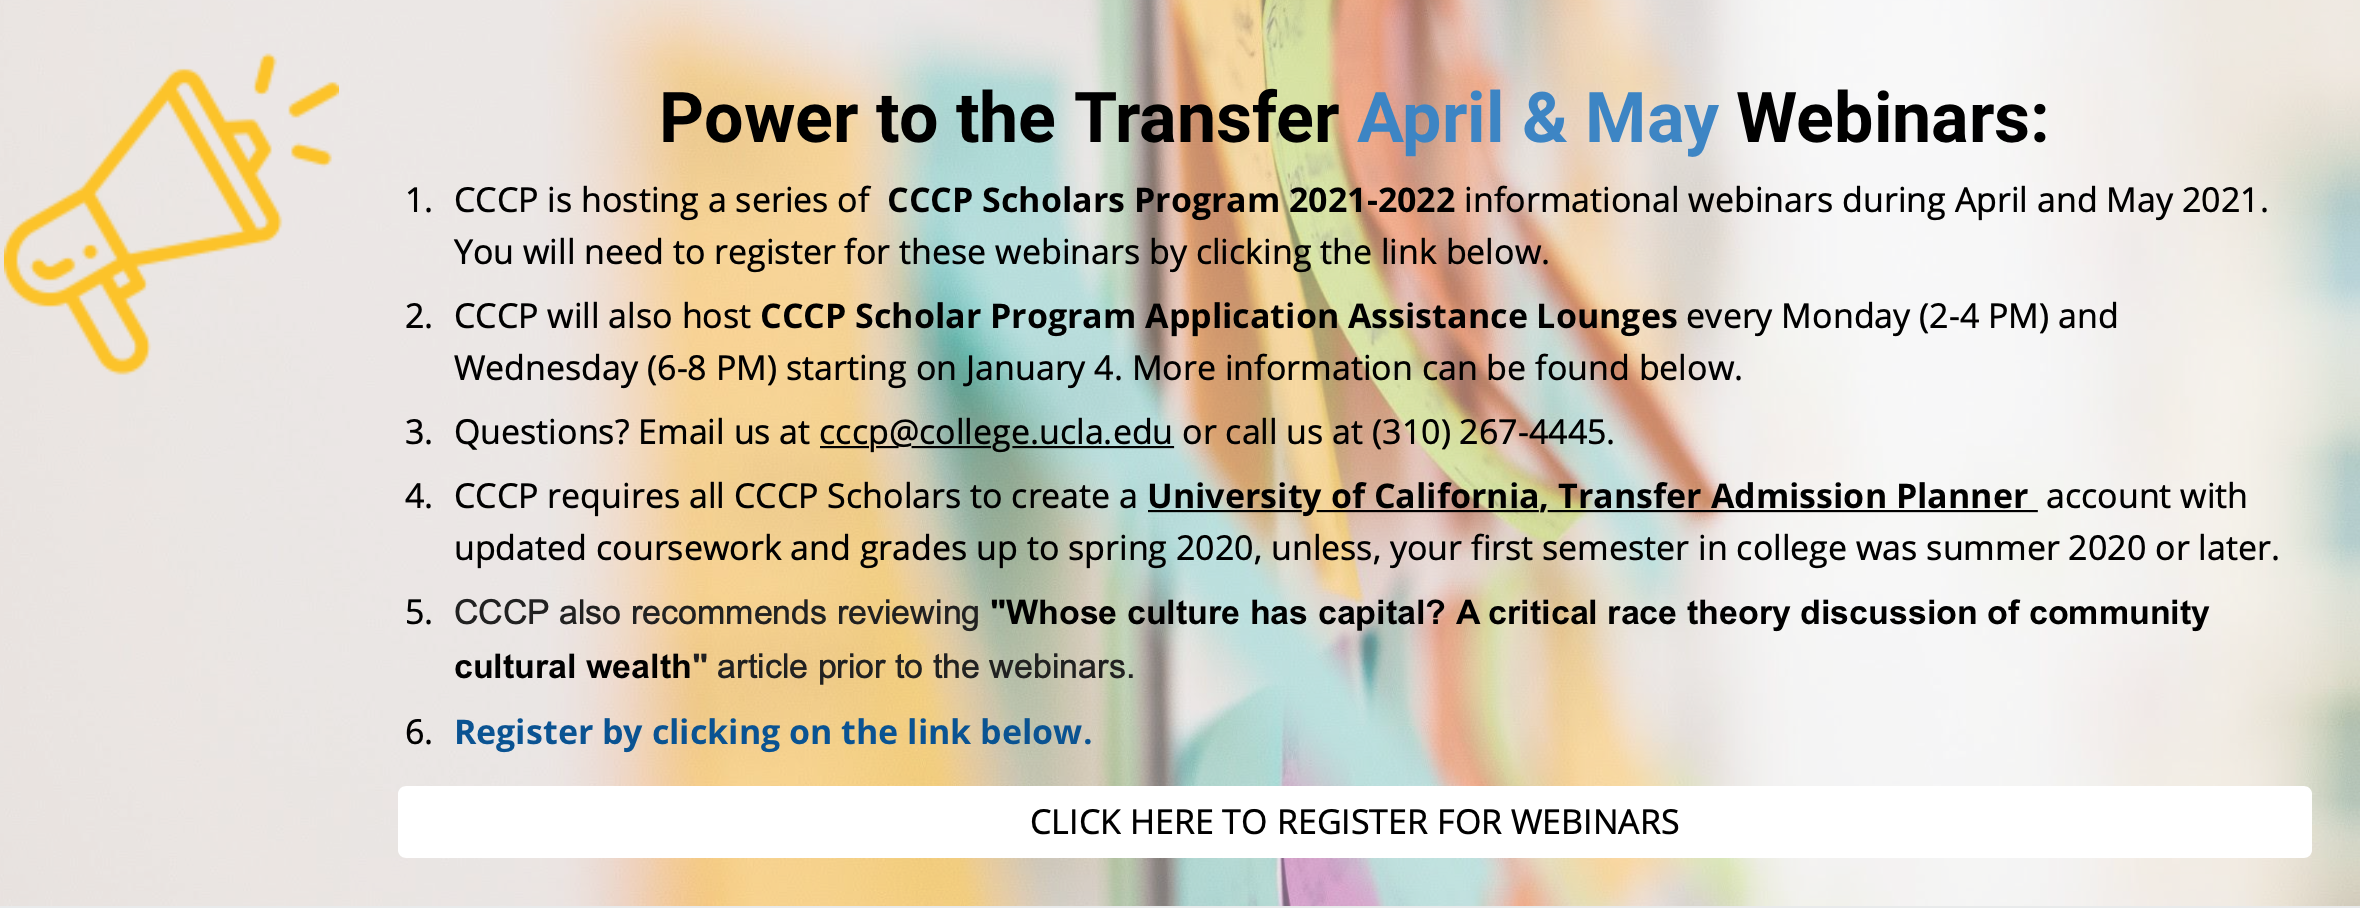 Transfer April and May Webinars Information Image 